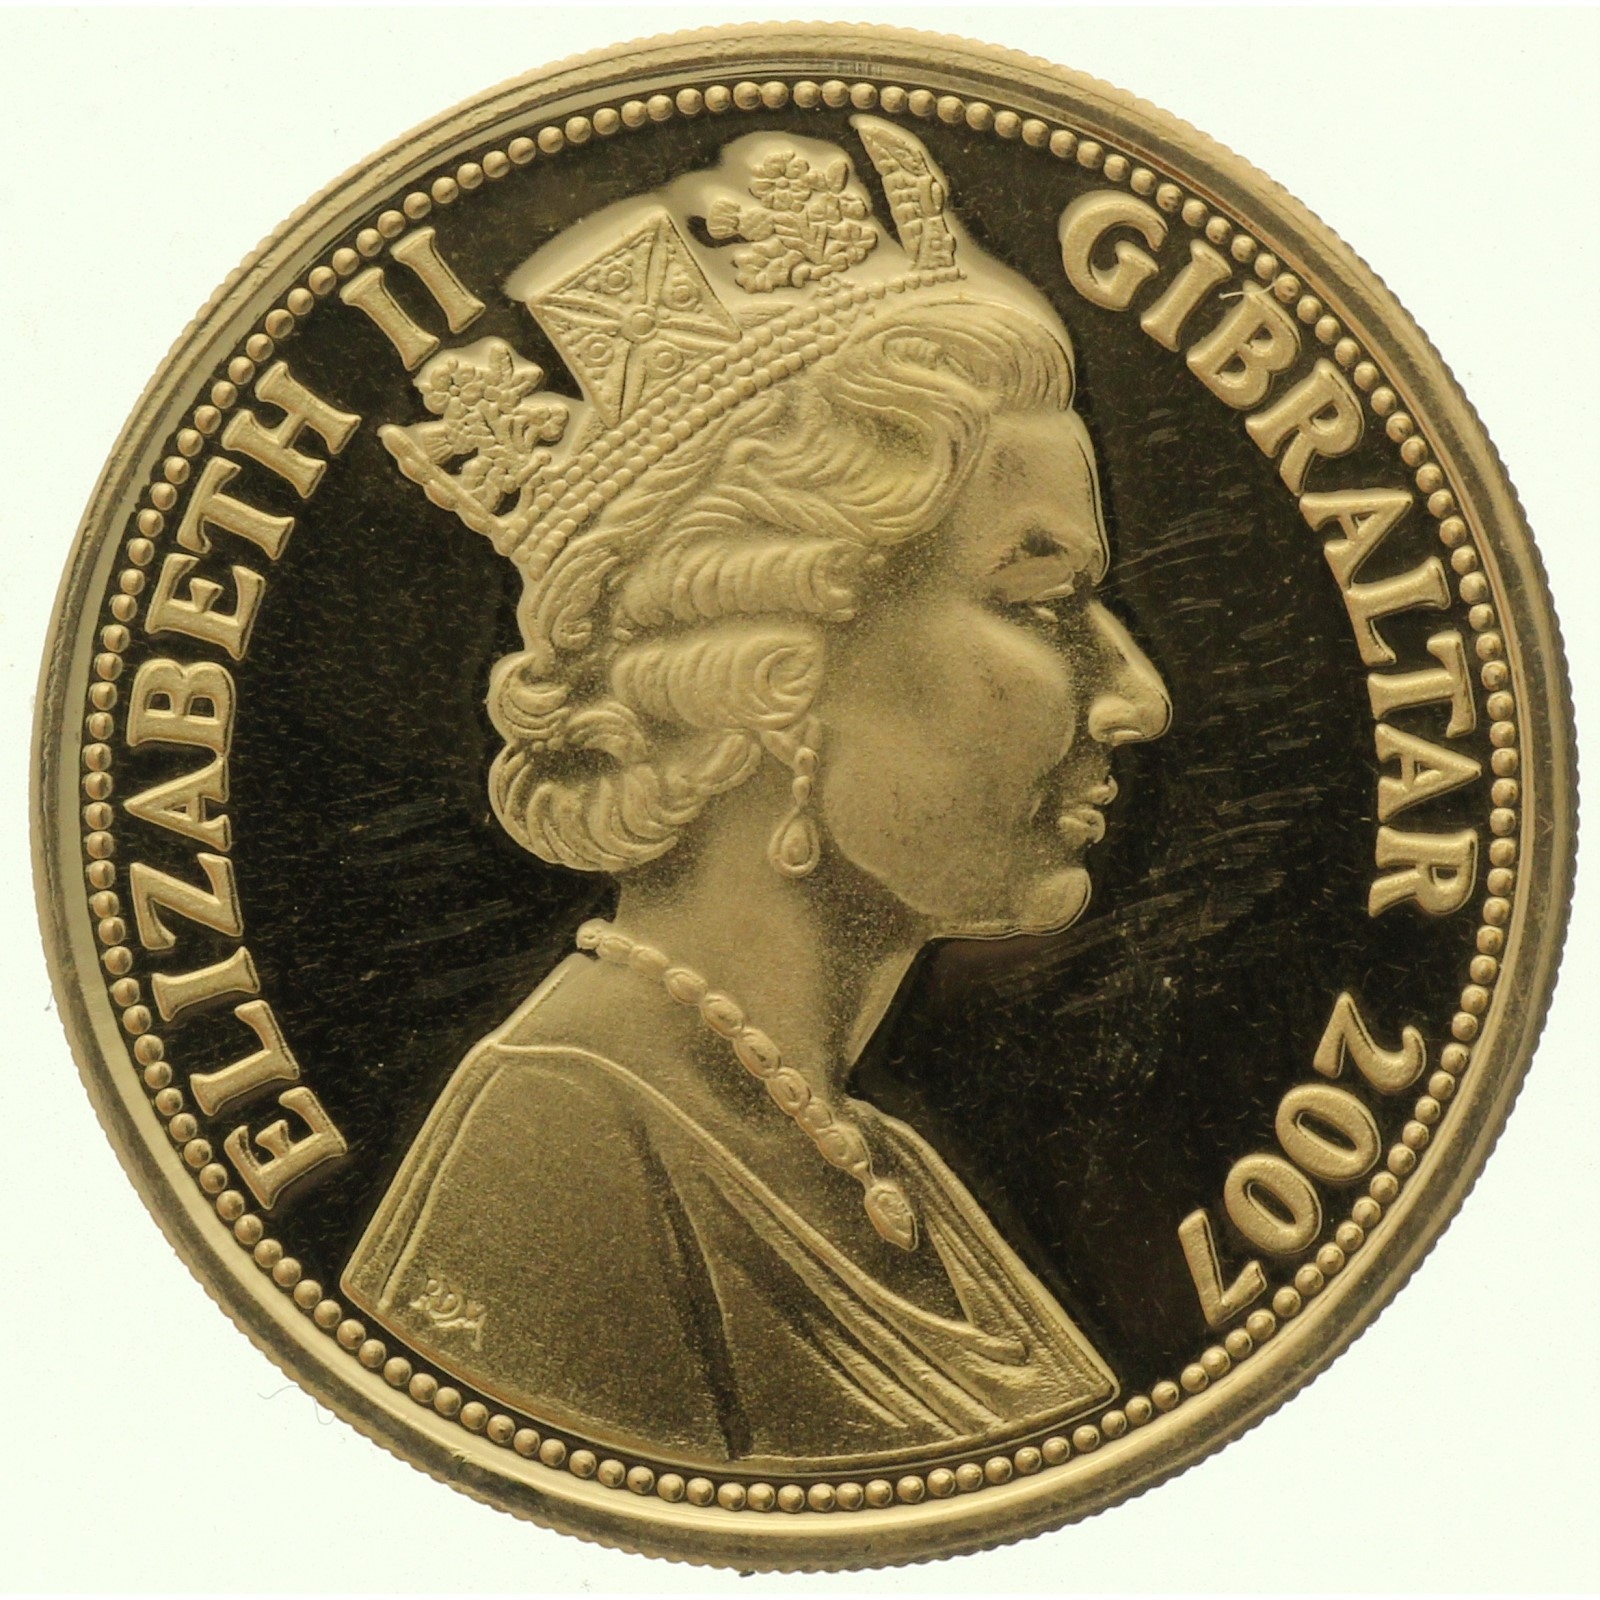 Gibraltar - 1 pound - 2007 - Diamond Wedding - Gold Proof